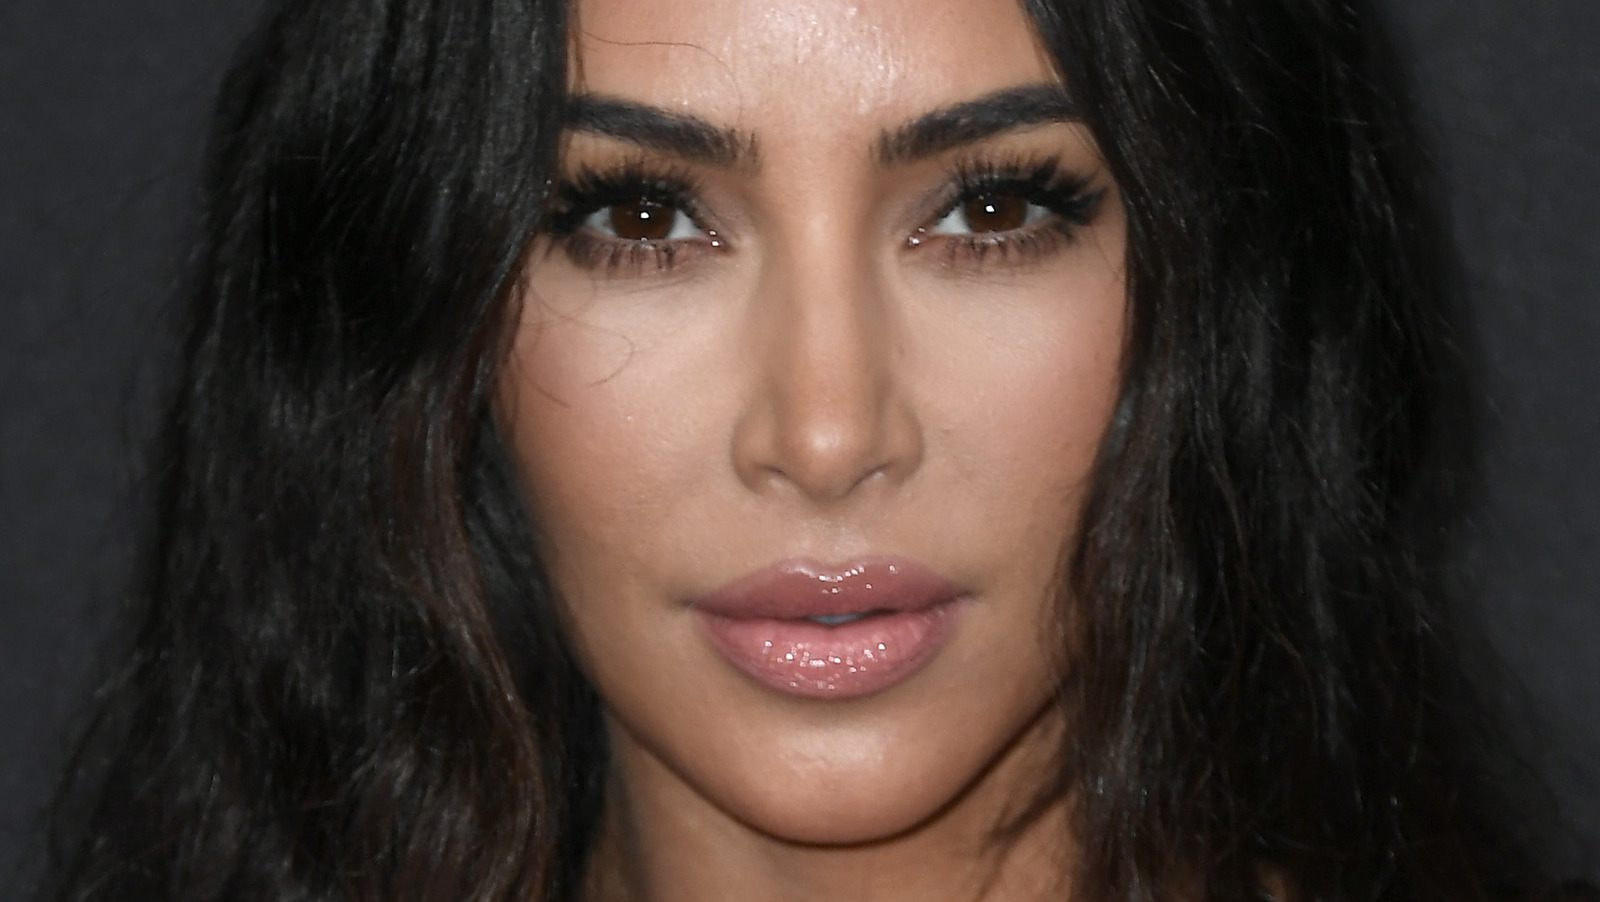 Kim Kardashians Recent Photo Is Sparking Bizarre Photoshop Claims